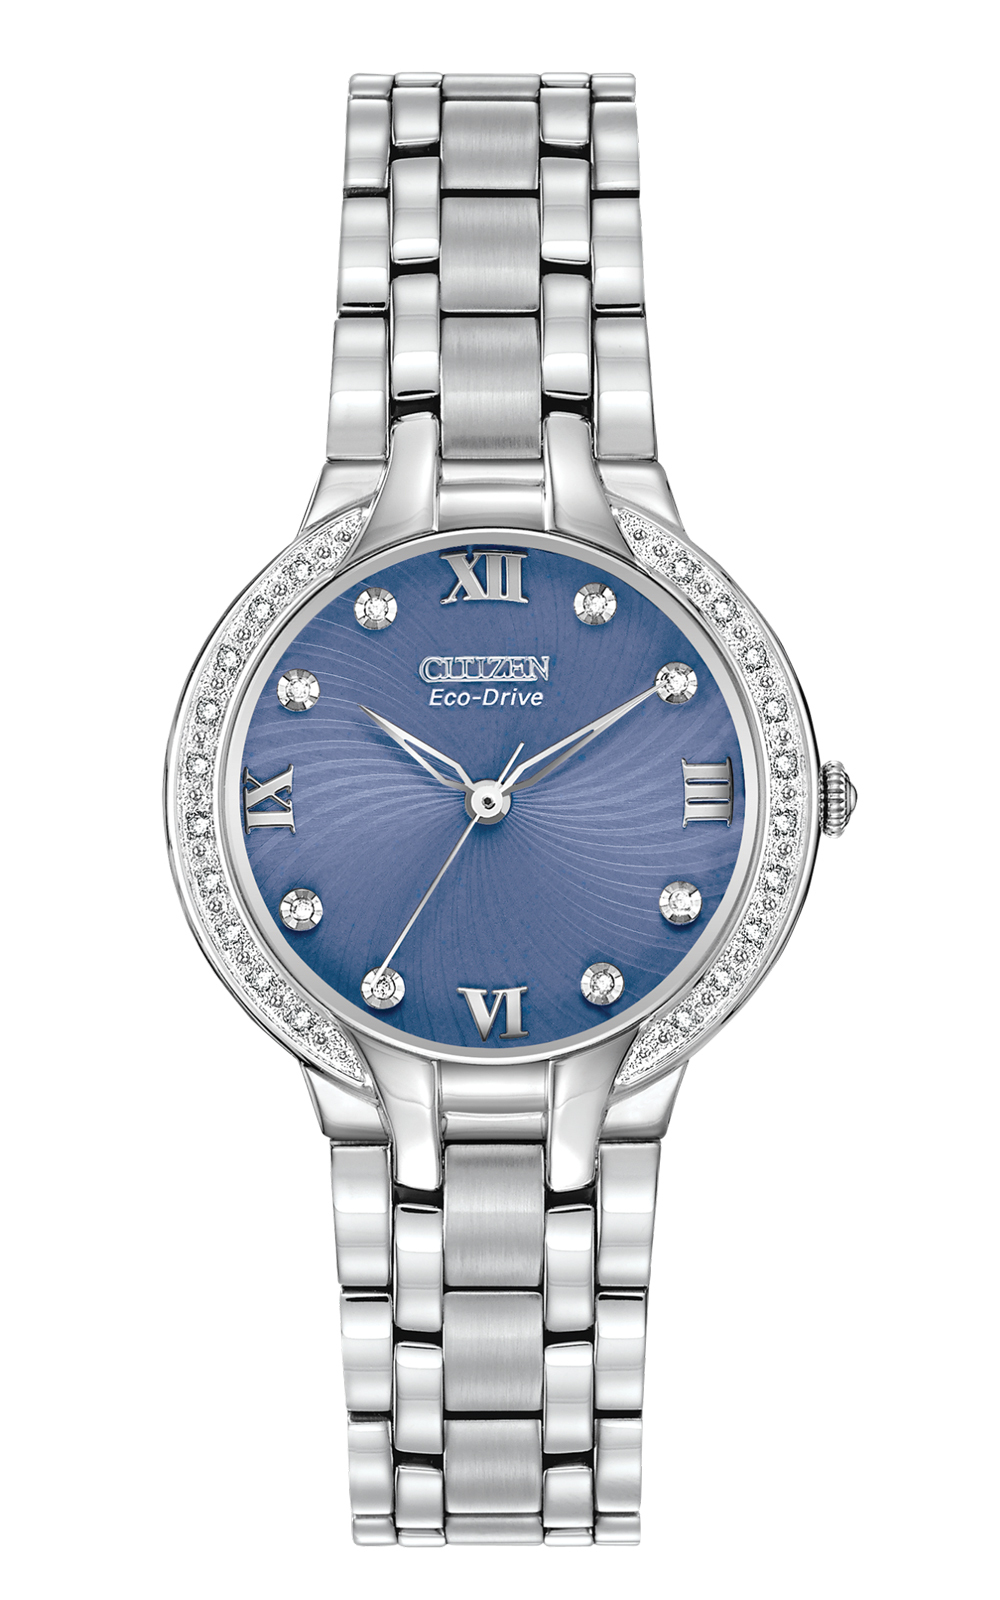 Đồng hồ nữ Citizen EM0120